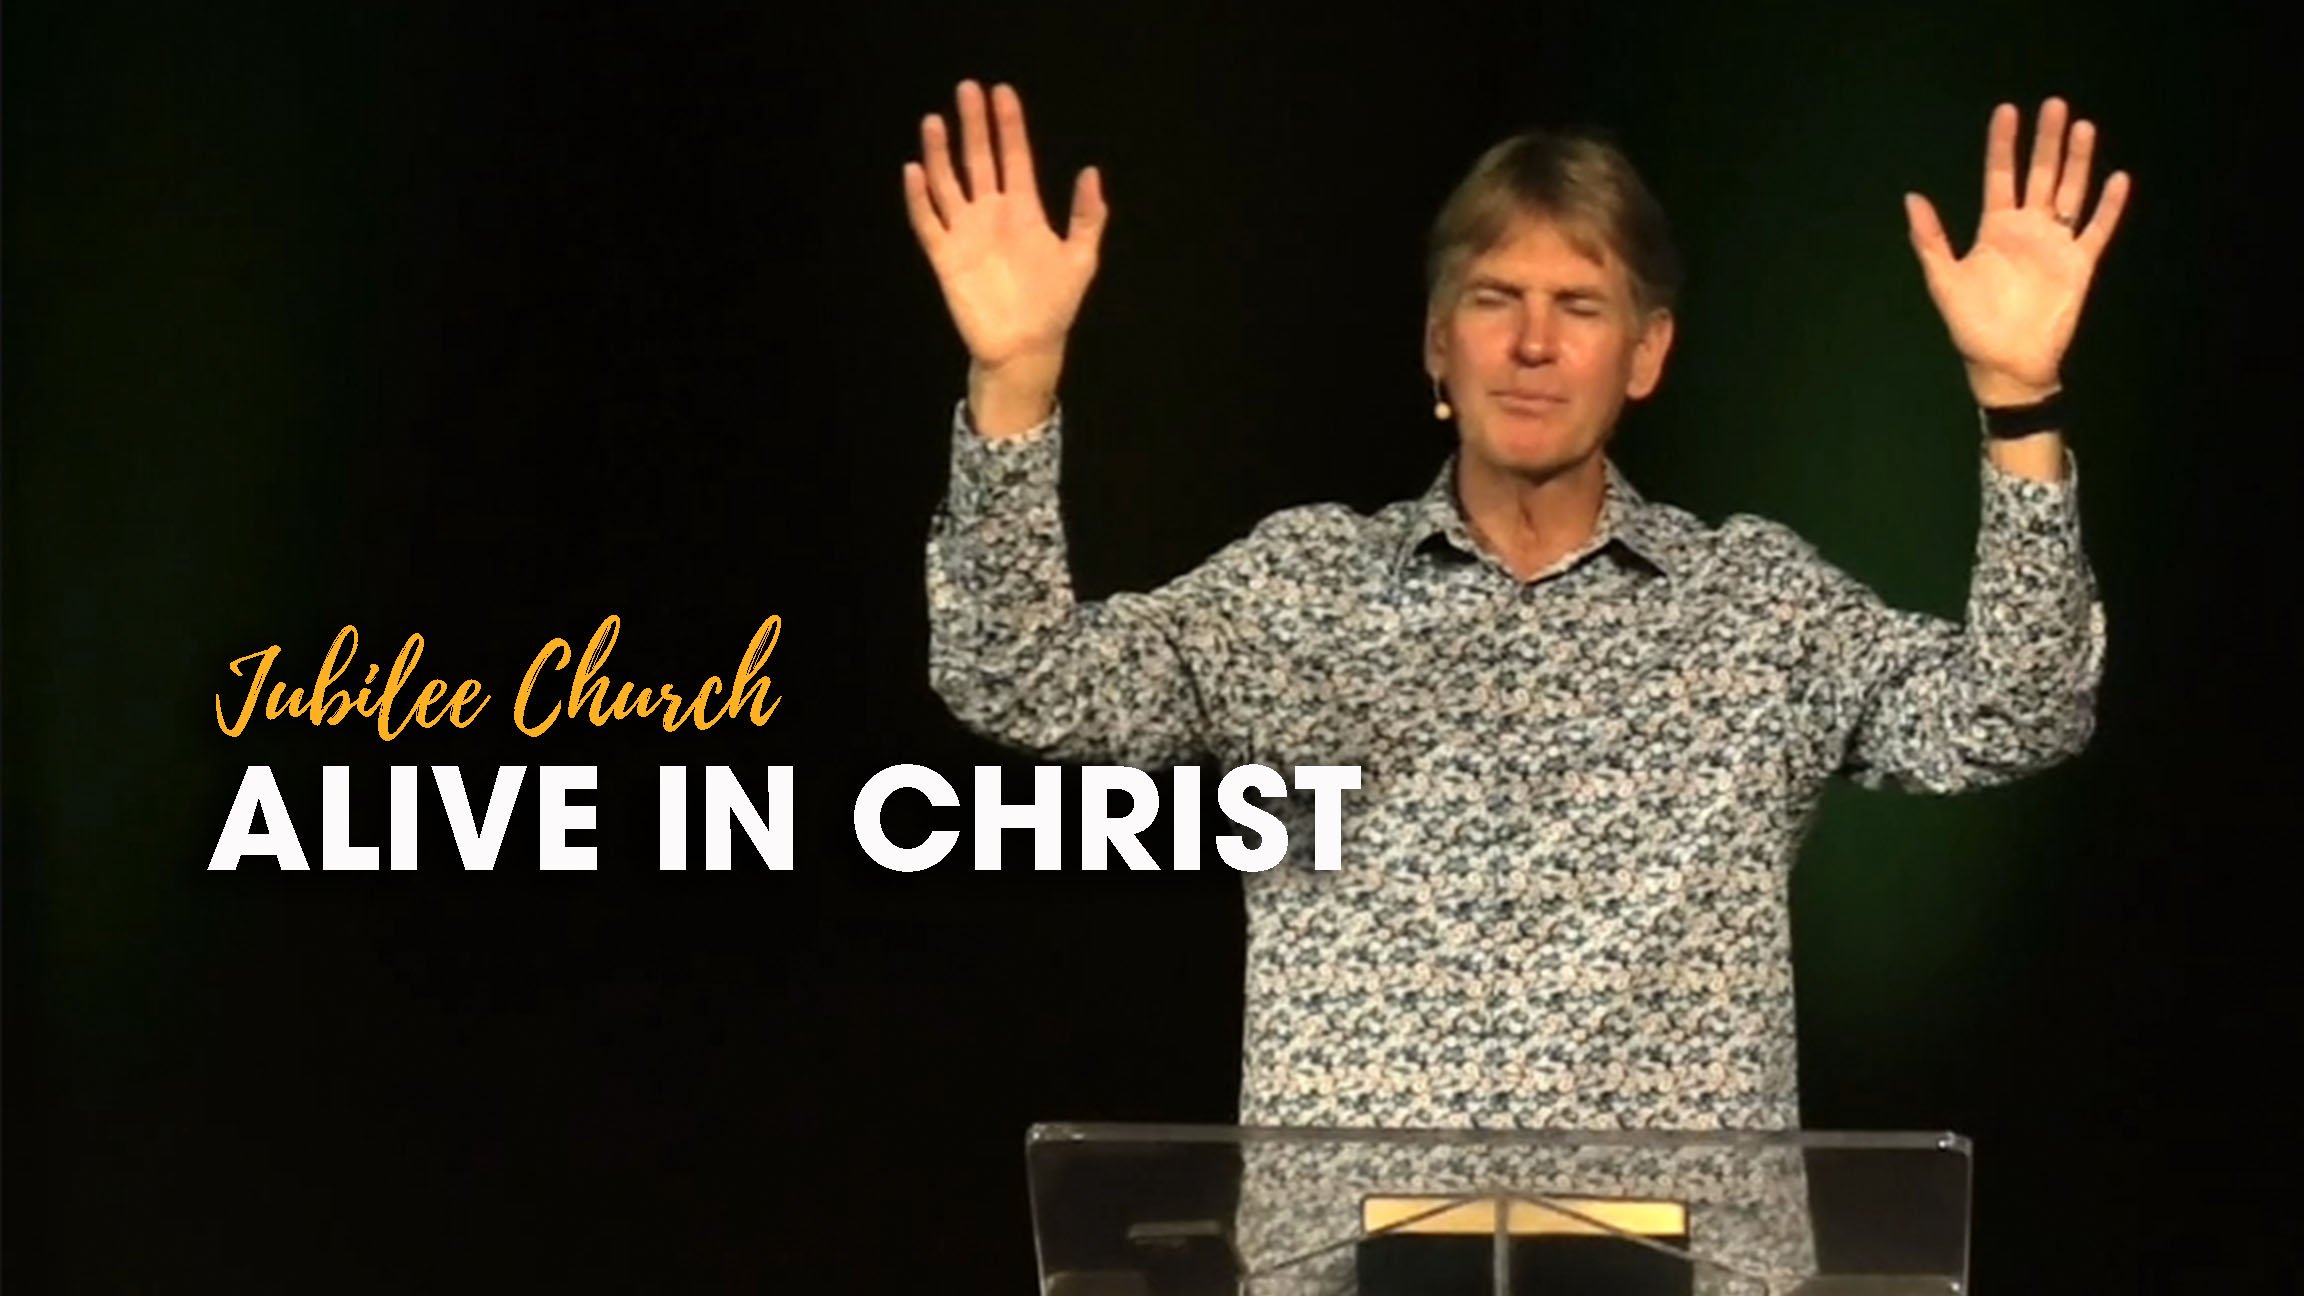 Alive In Christ